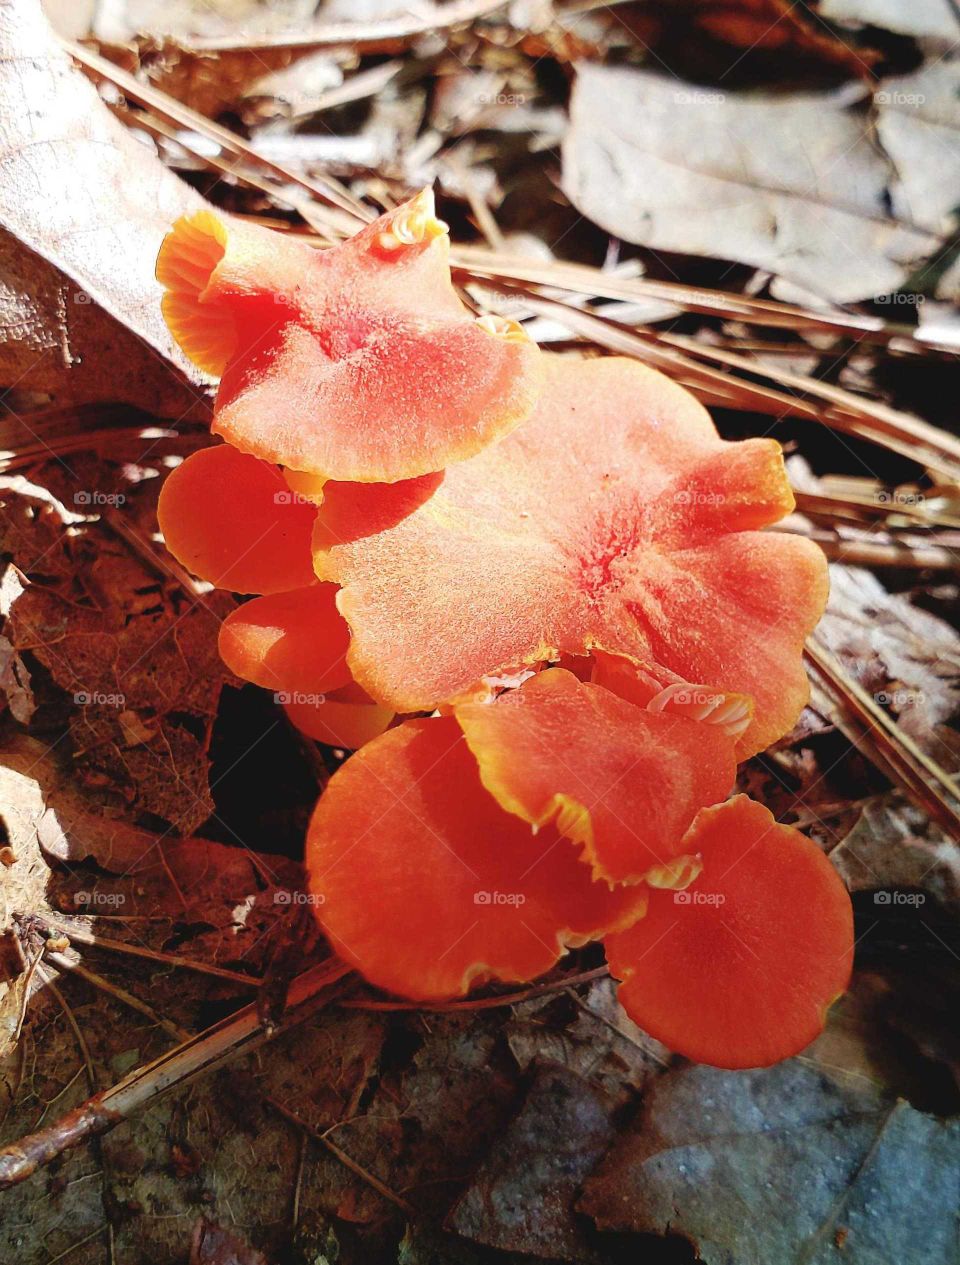 coral colored mushrooms